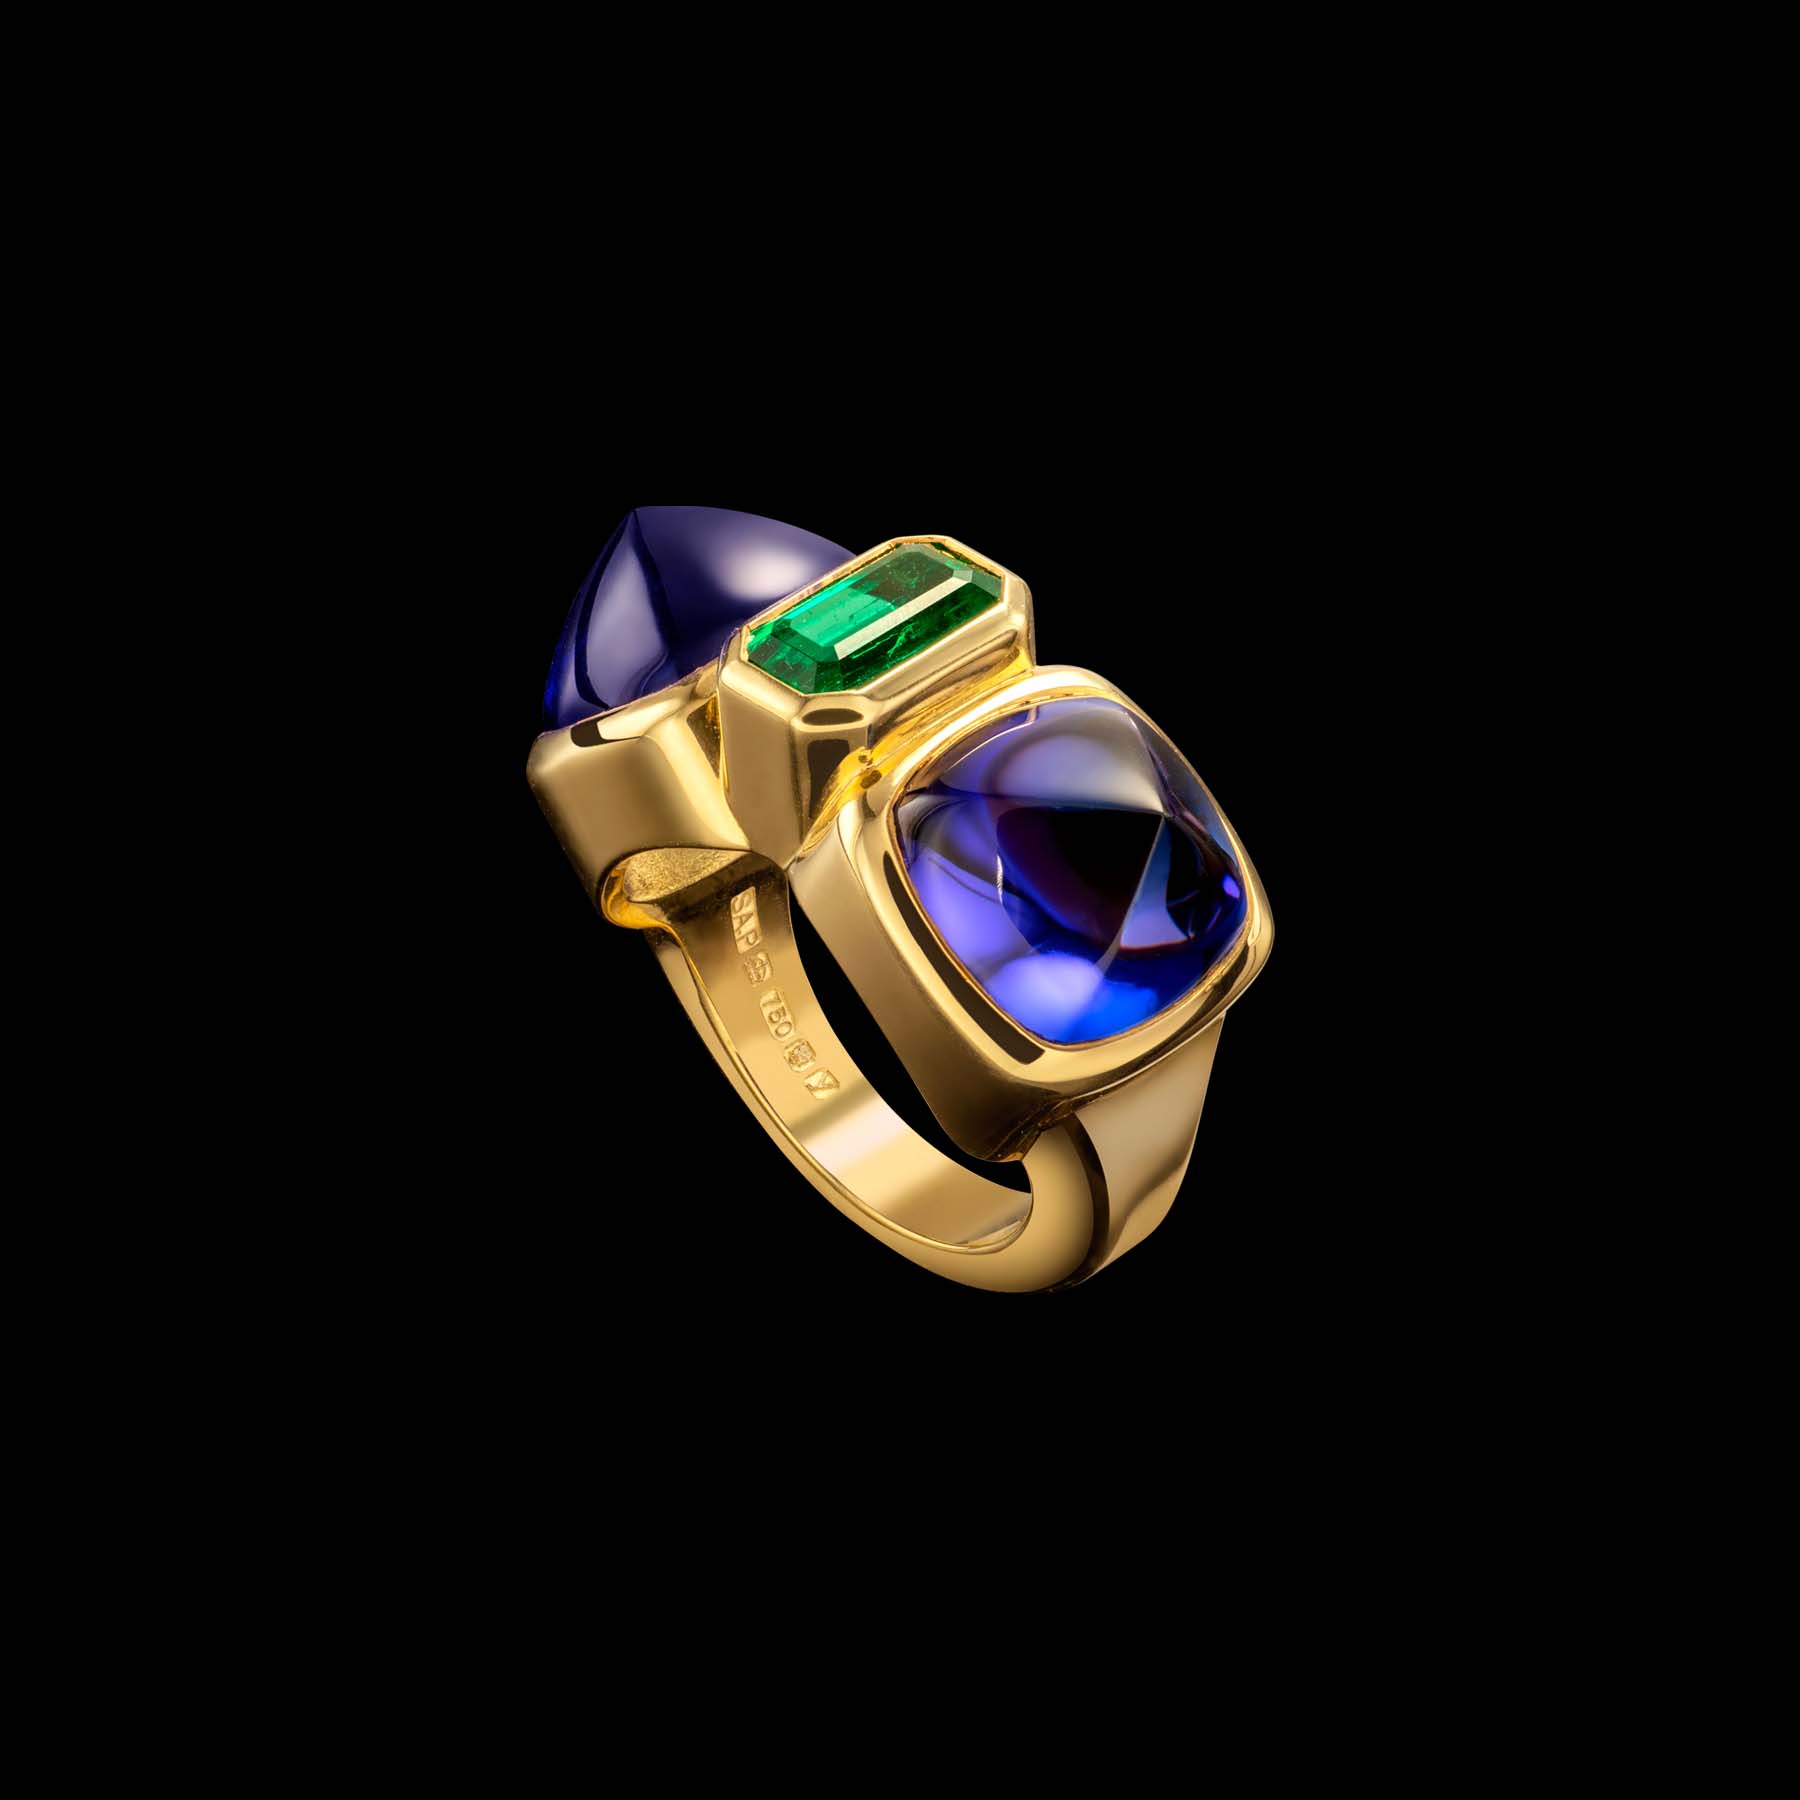 Edible ring by designer Solange Azagury-Partridge - 18 carat Yellow Gold, Tanzanite & Emerald - side view